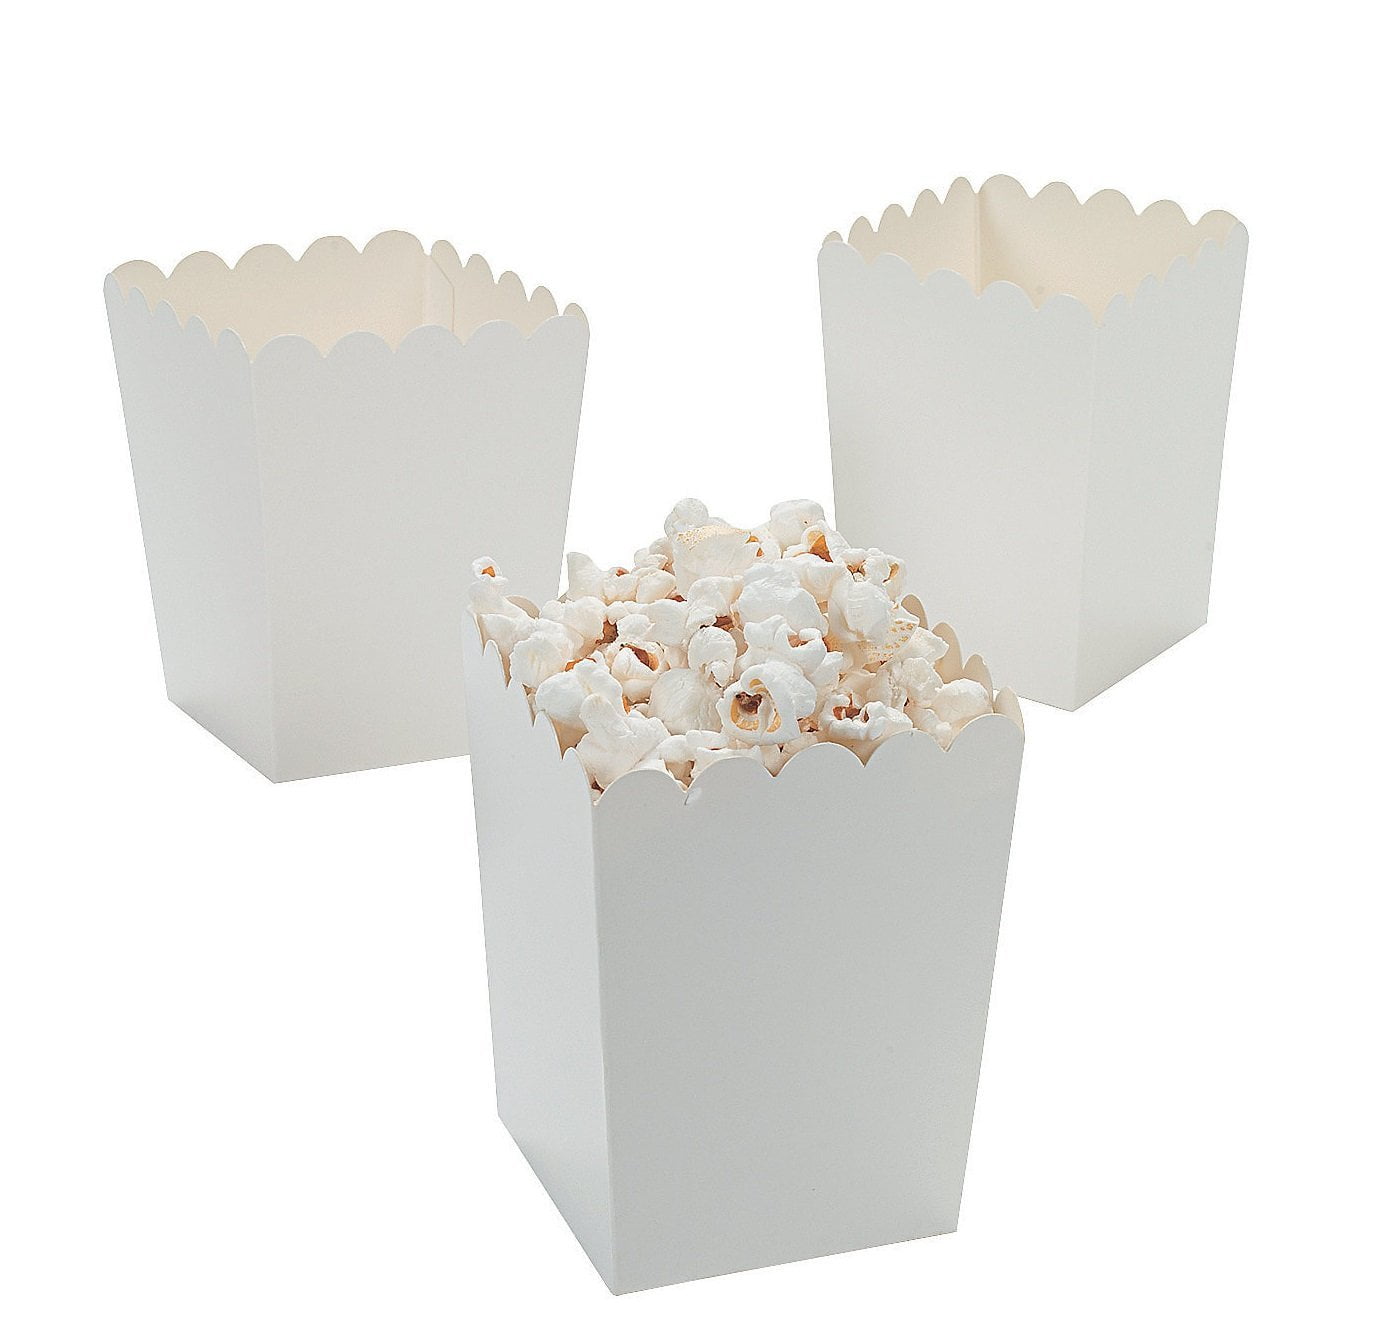 Mini White Popcorn Boxes - Walmart.com - Walmart.com